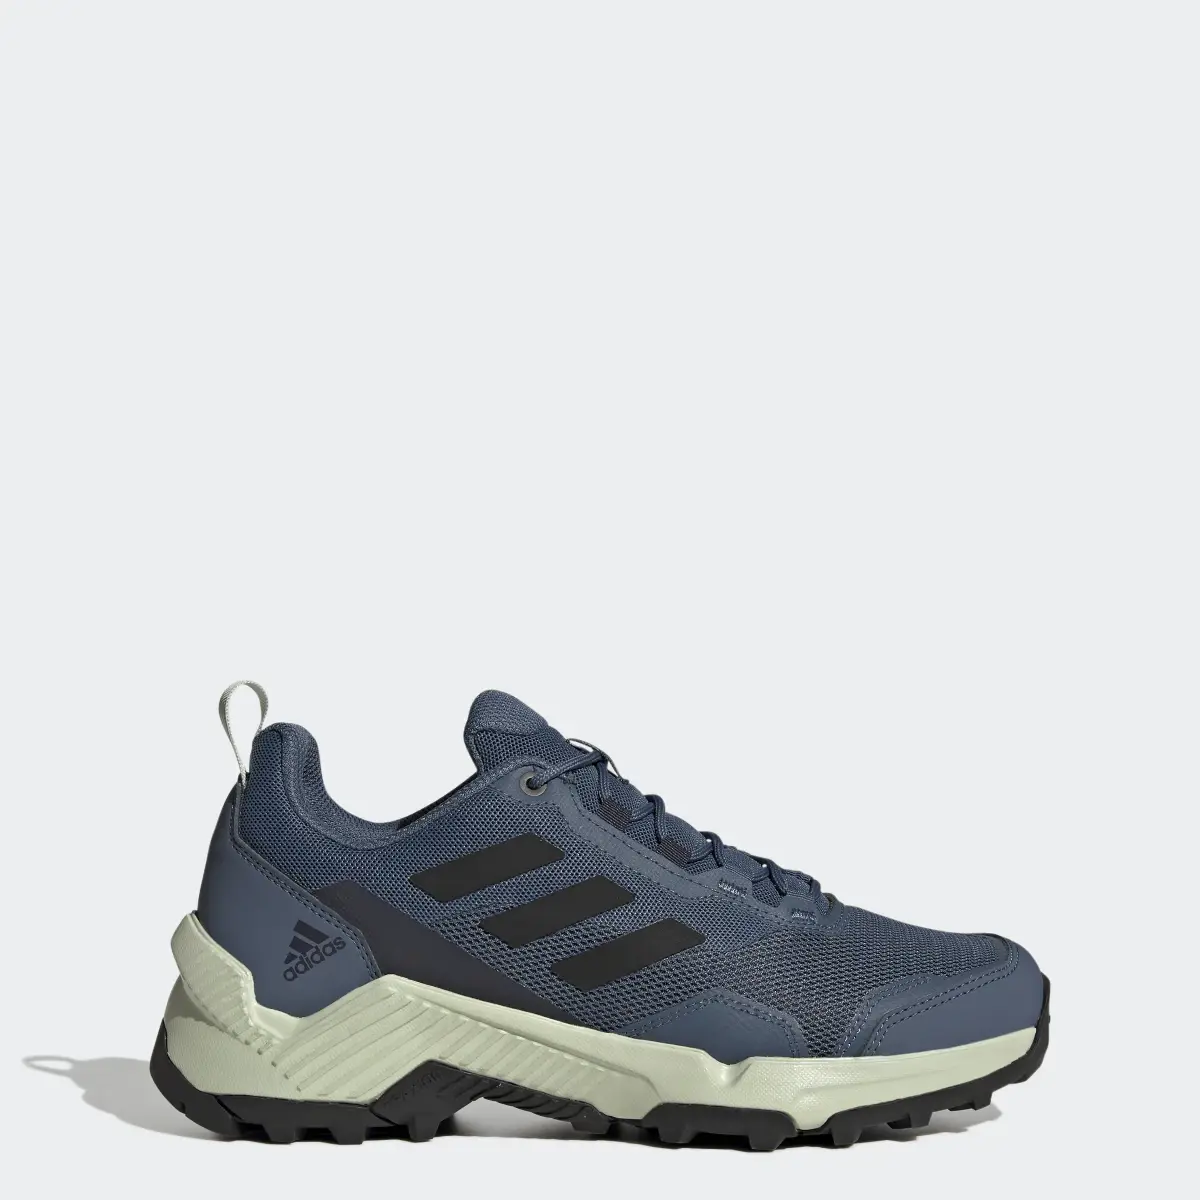 Adidas Chaussure de randonnée Eastrail 2.0. 1